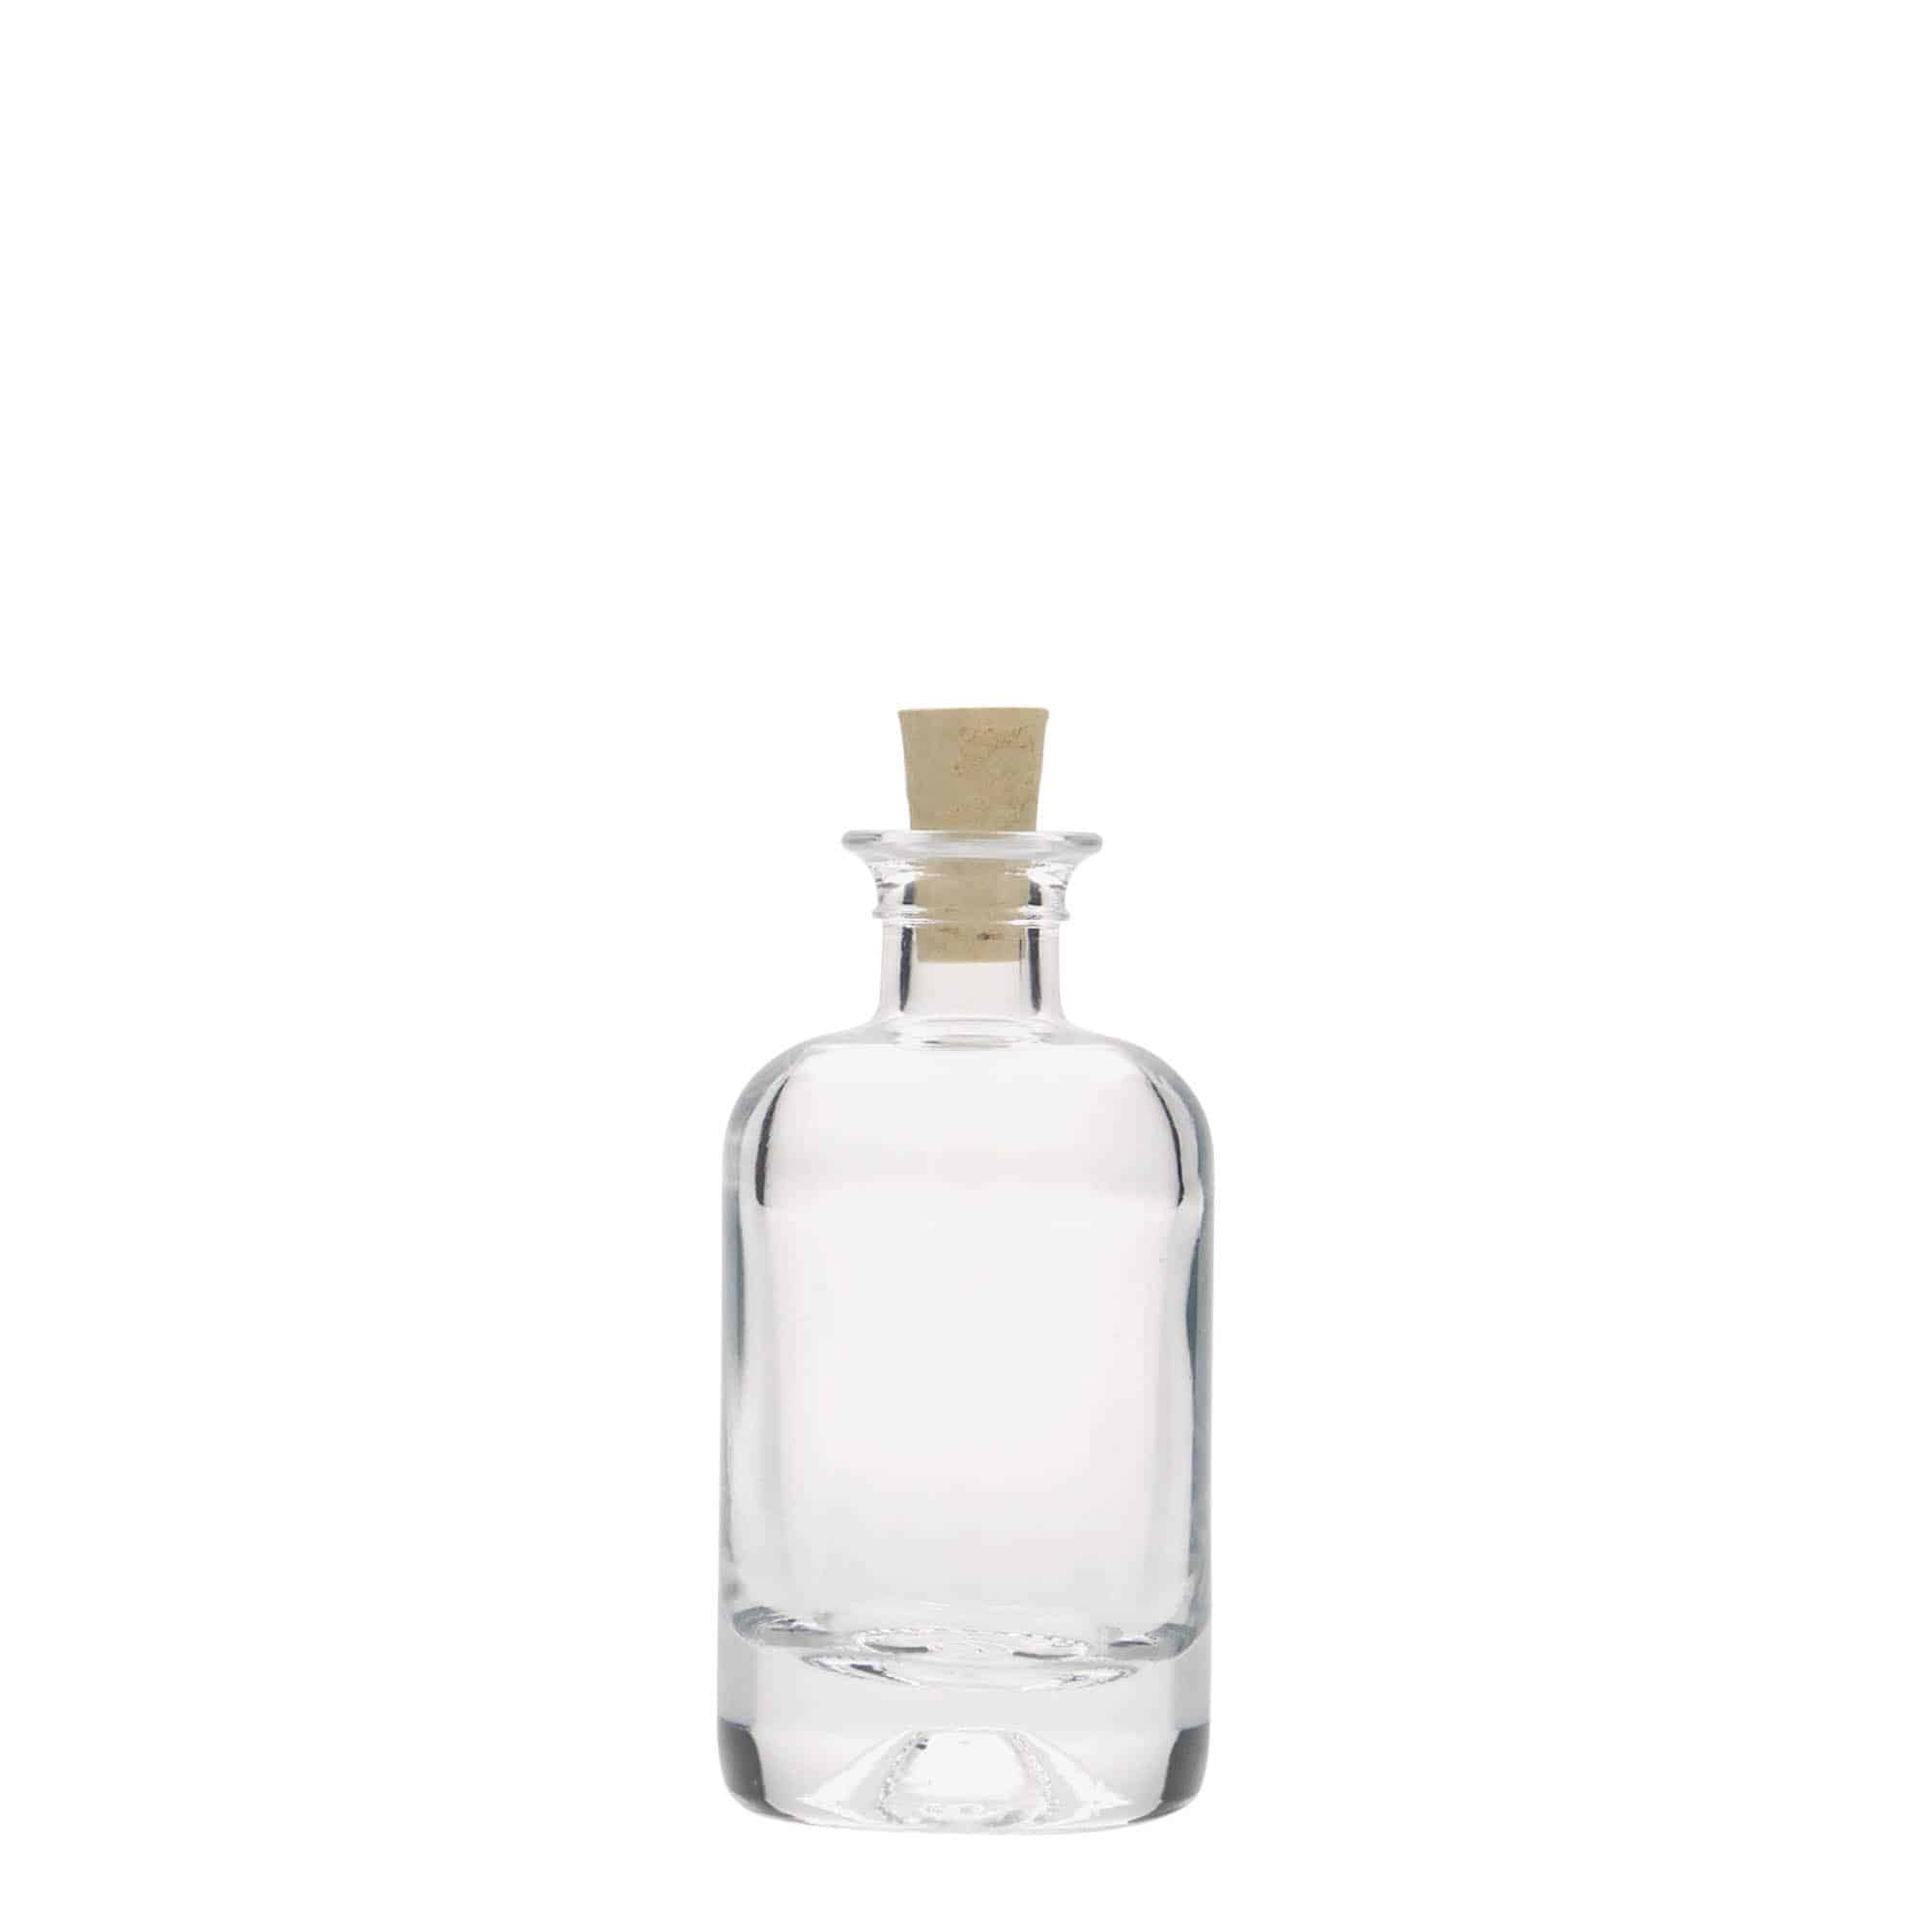 Botella de vidrio de farmacia de 40 ml, boca: corcho